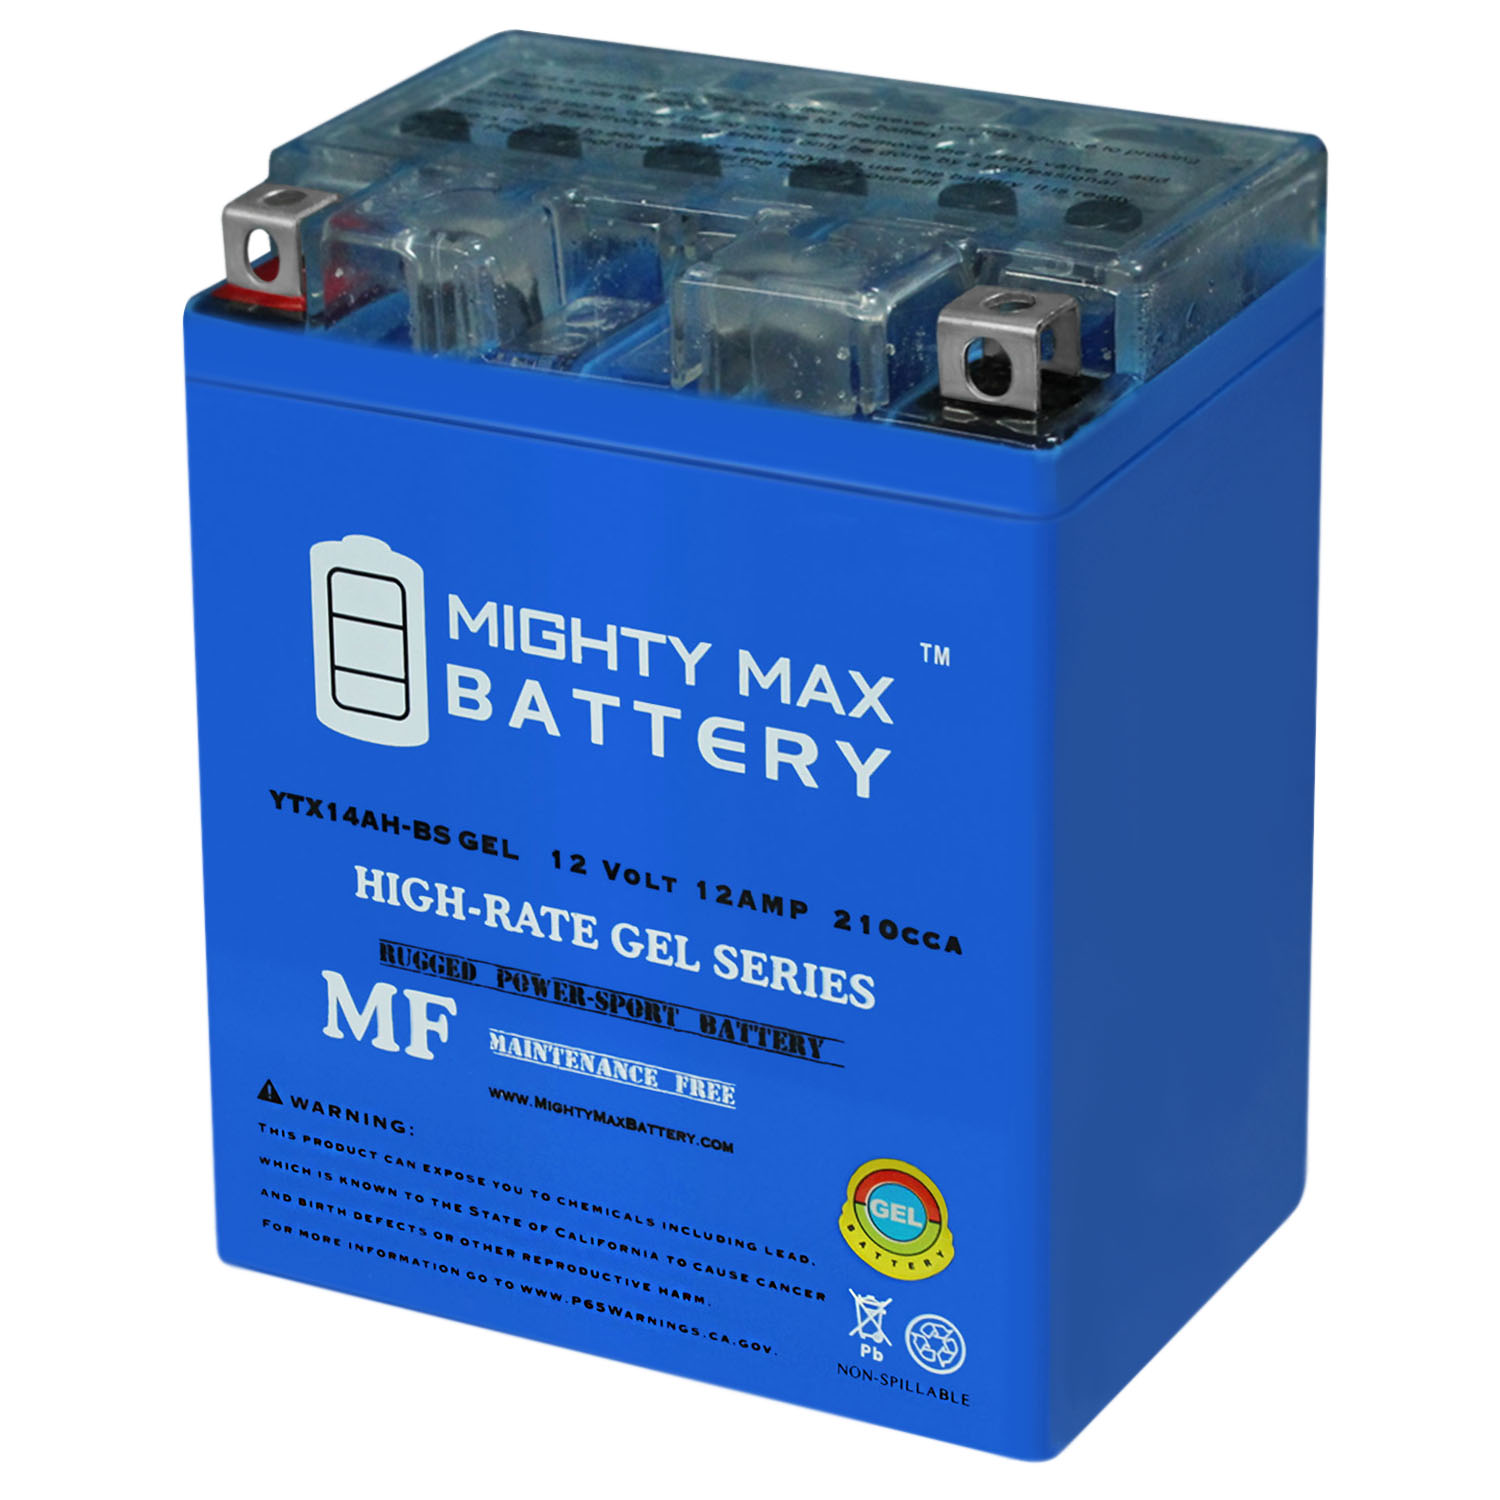 Mild Shuraba Bemyndigelse YTX14AH-BS GEL Battery Replaces Chrome Pro HighPerformance PowerSport -  MightyMaxBattery